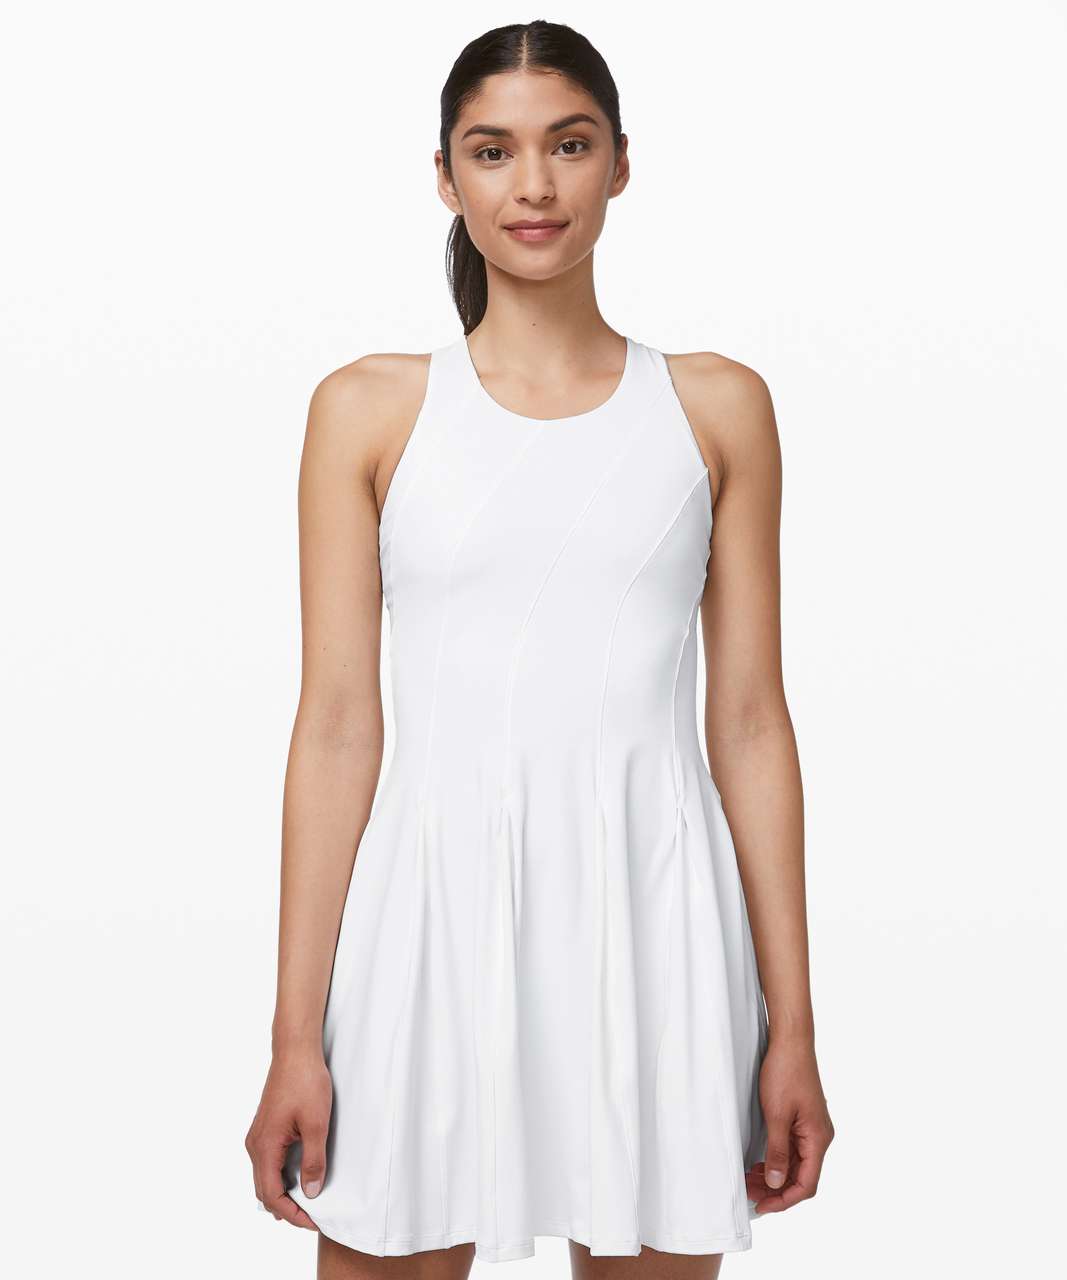 lululemon white dress